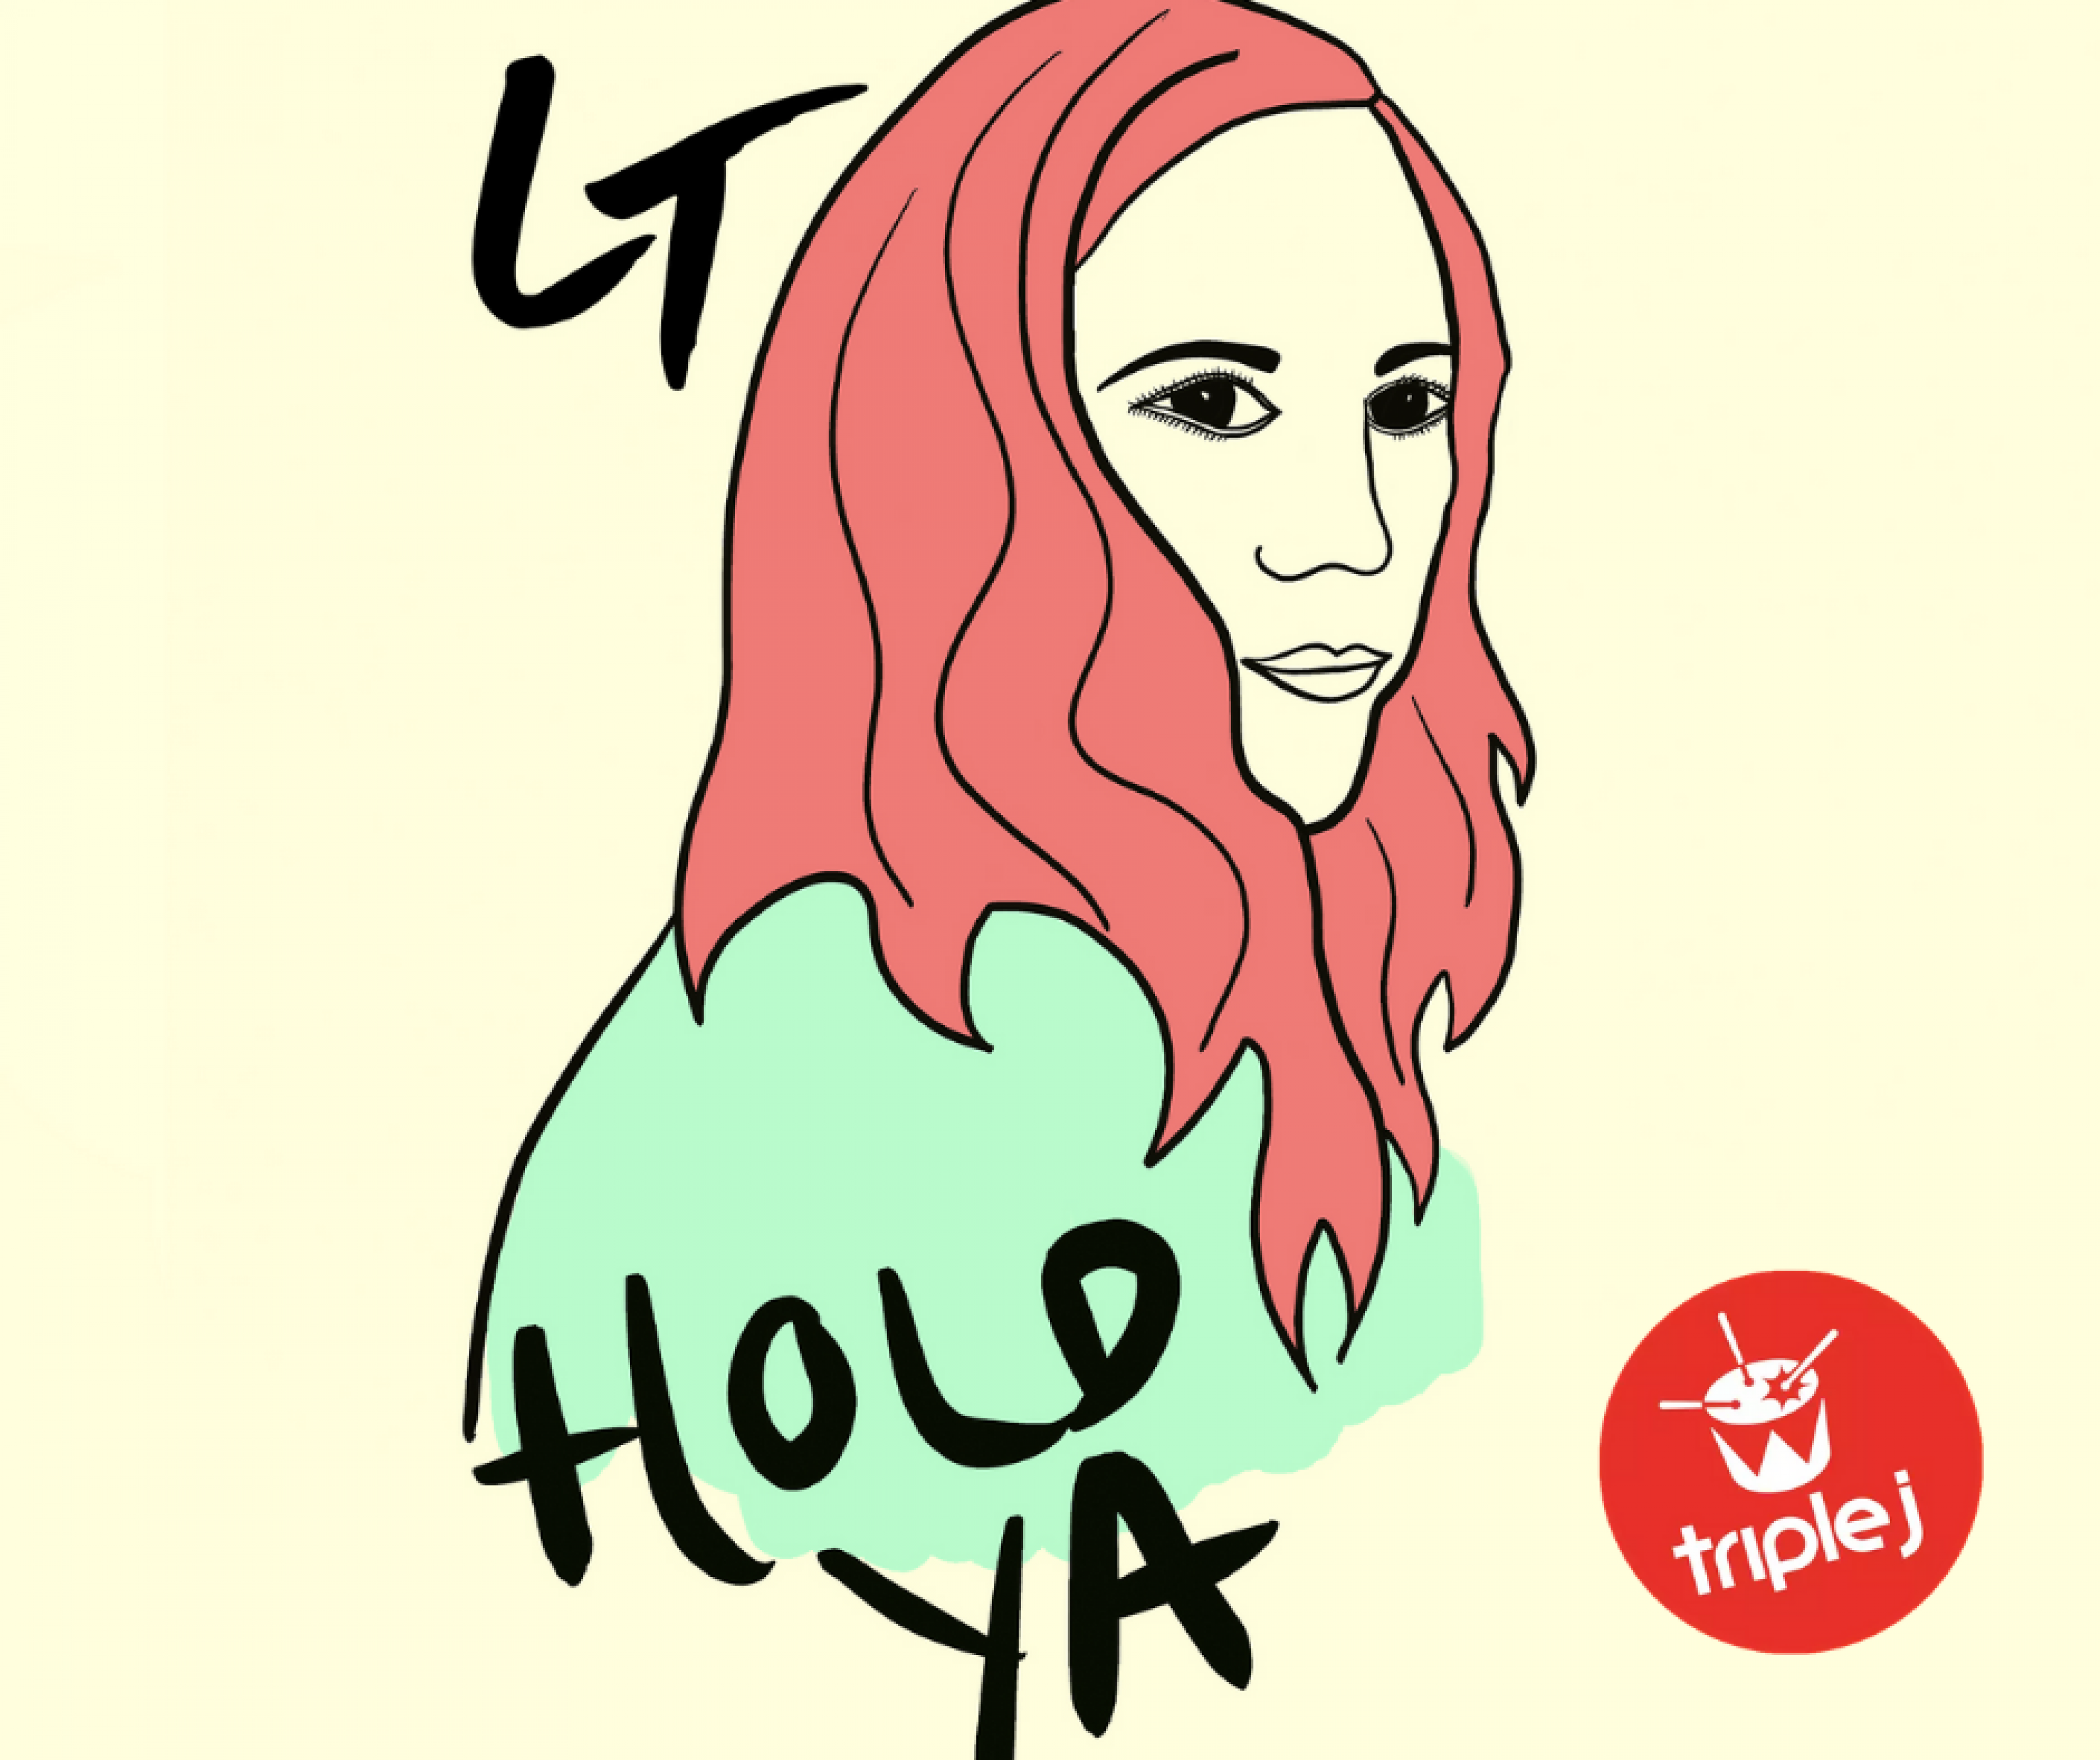 LT - 'Hold Ya' Airplay via Triple J 'Home & Hosed